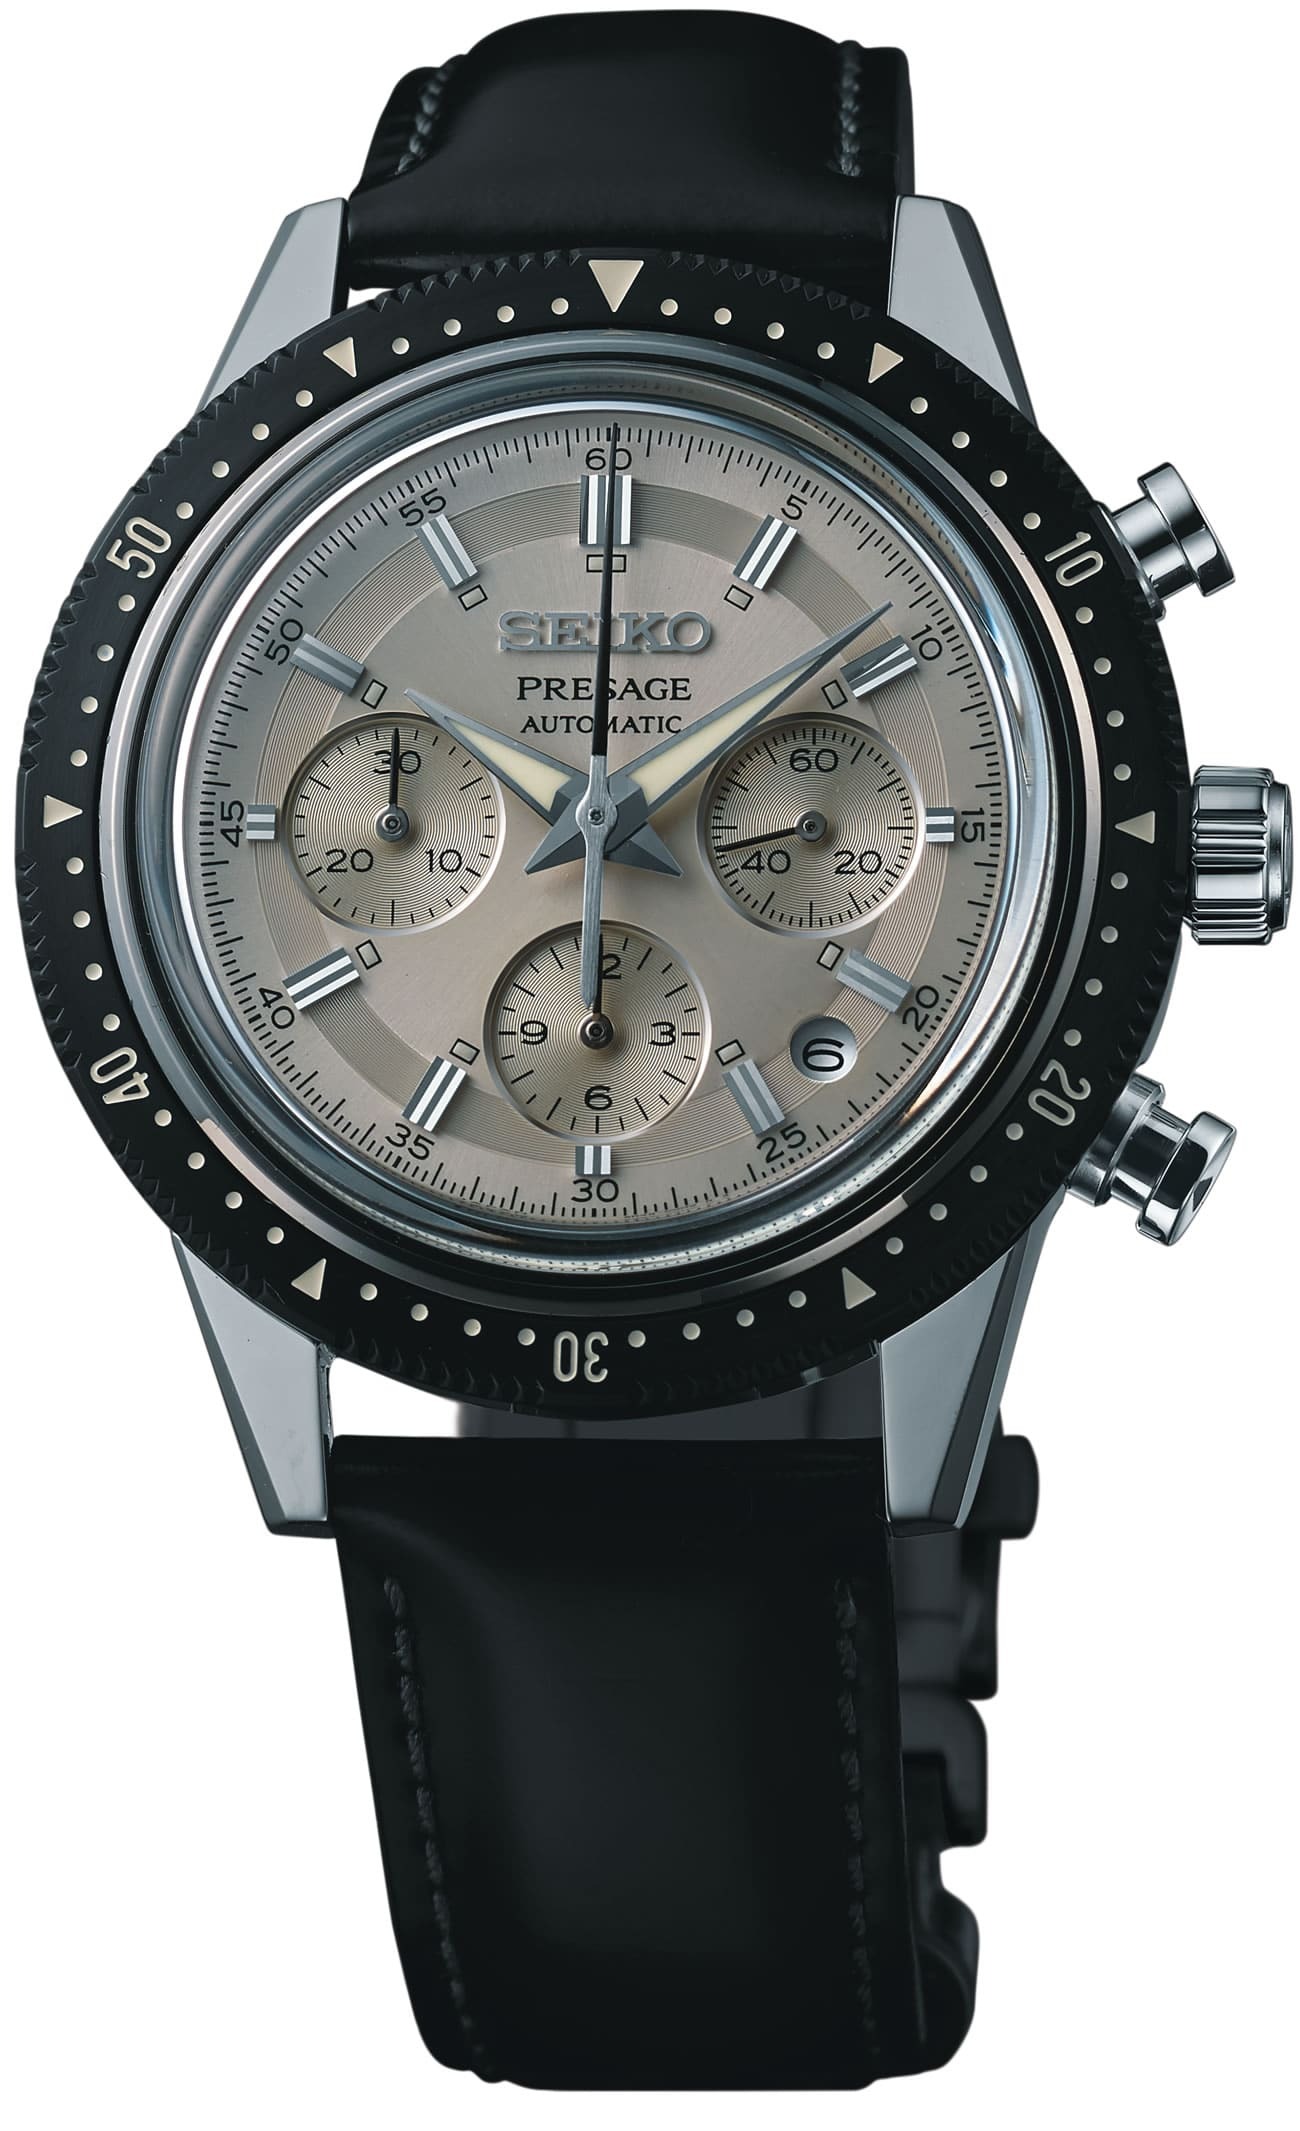 Seiko Presage SRQ031 Limited Edition - Exquisite Timepieces